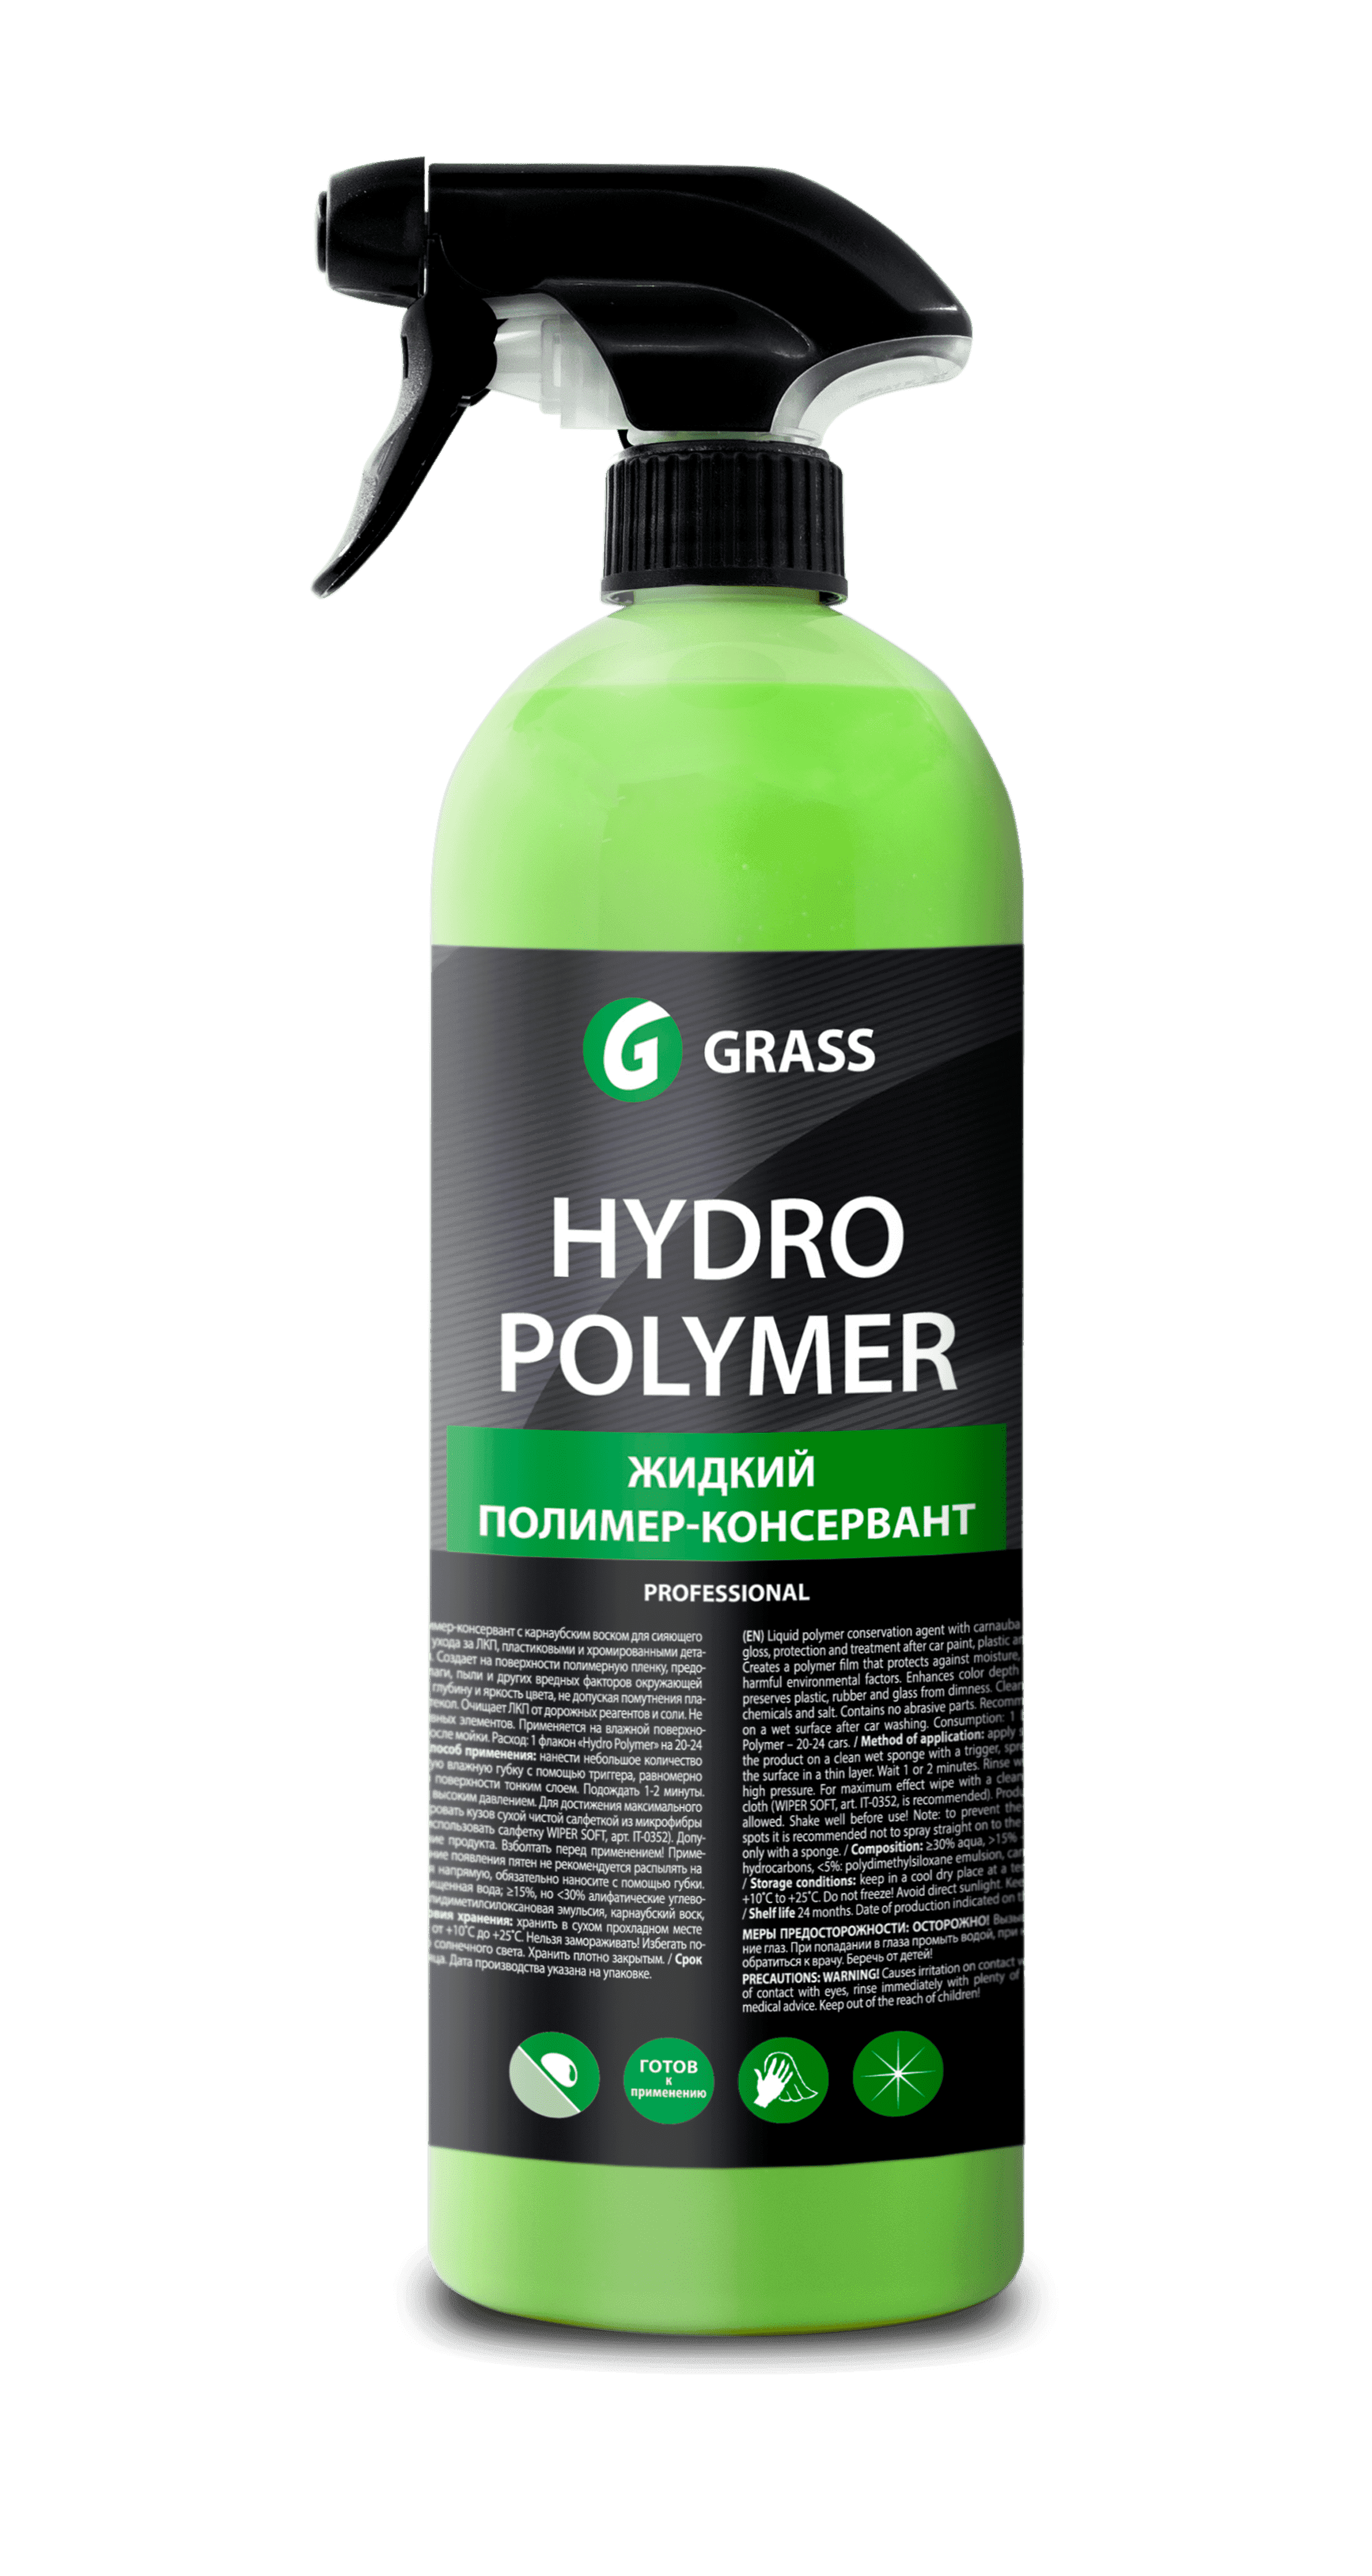 Hydro Polymer Grass - Хит продаж!